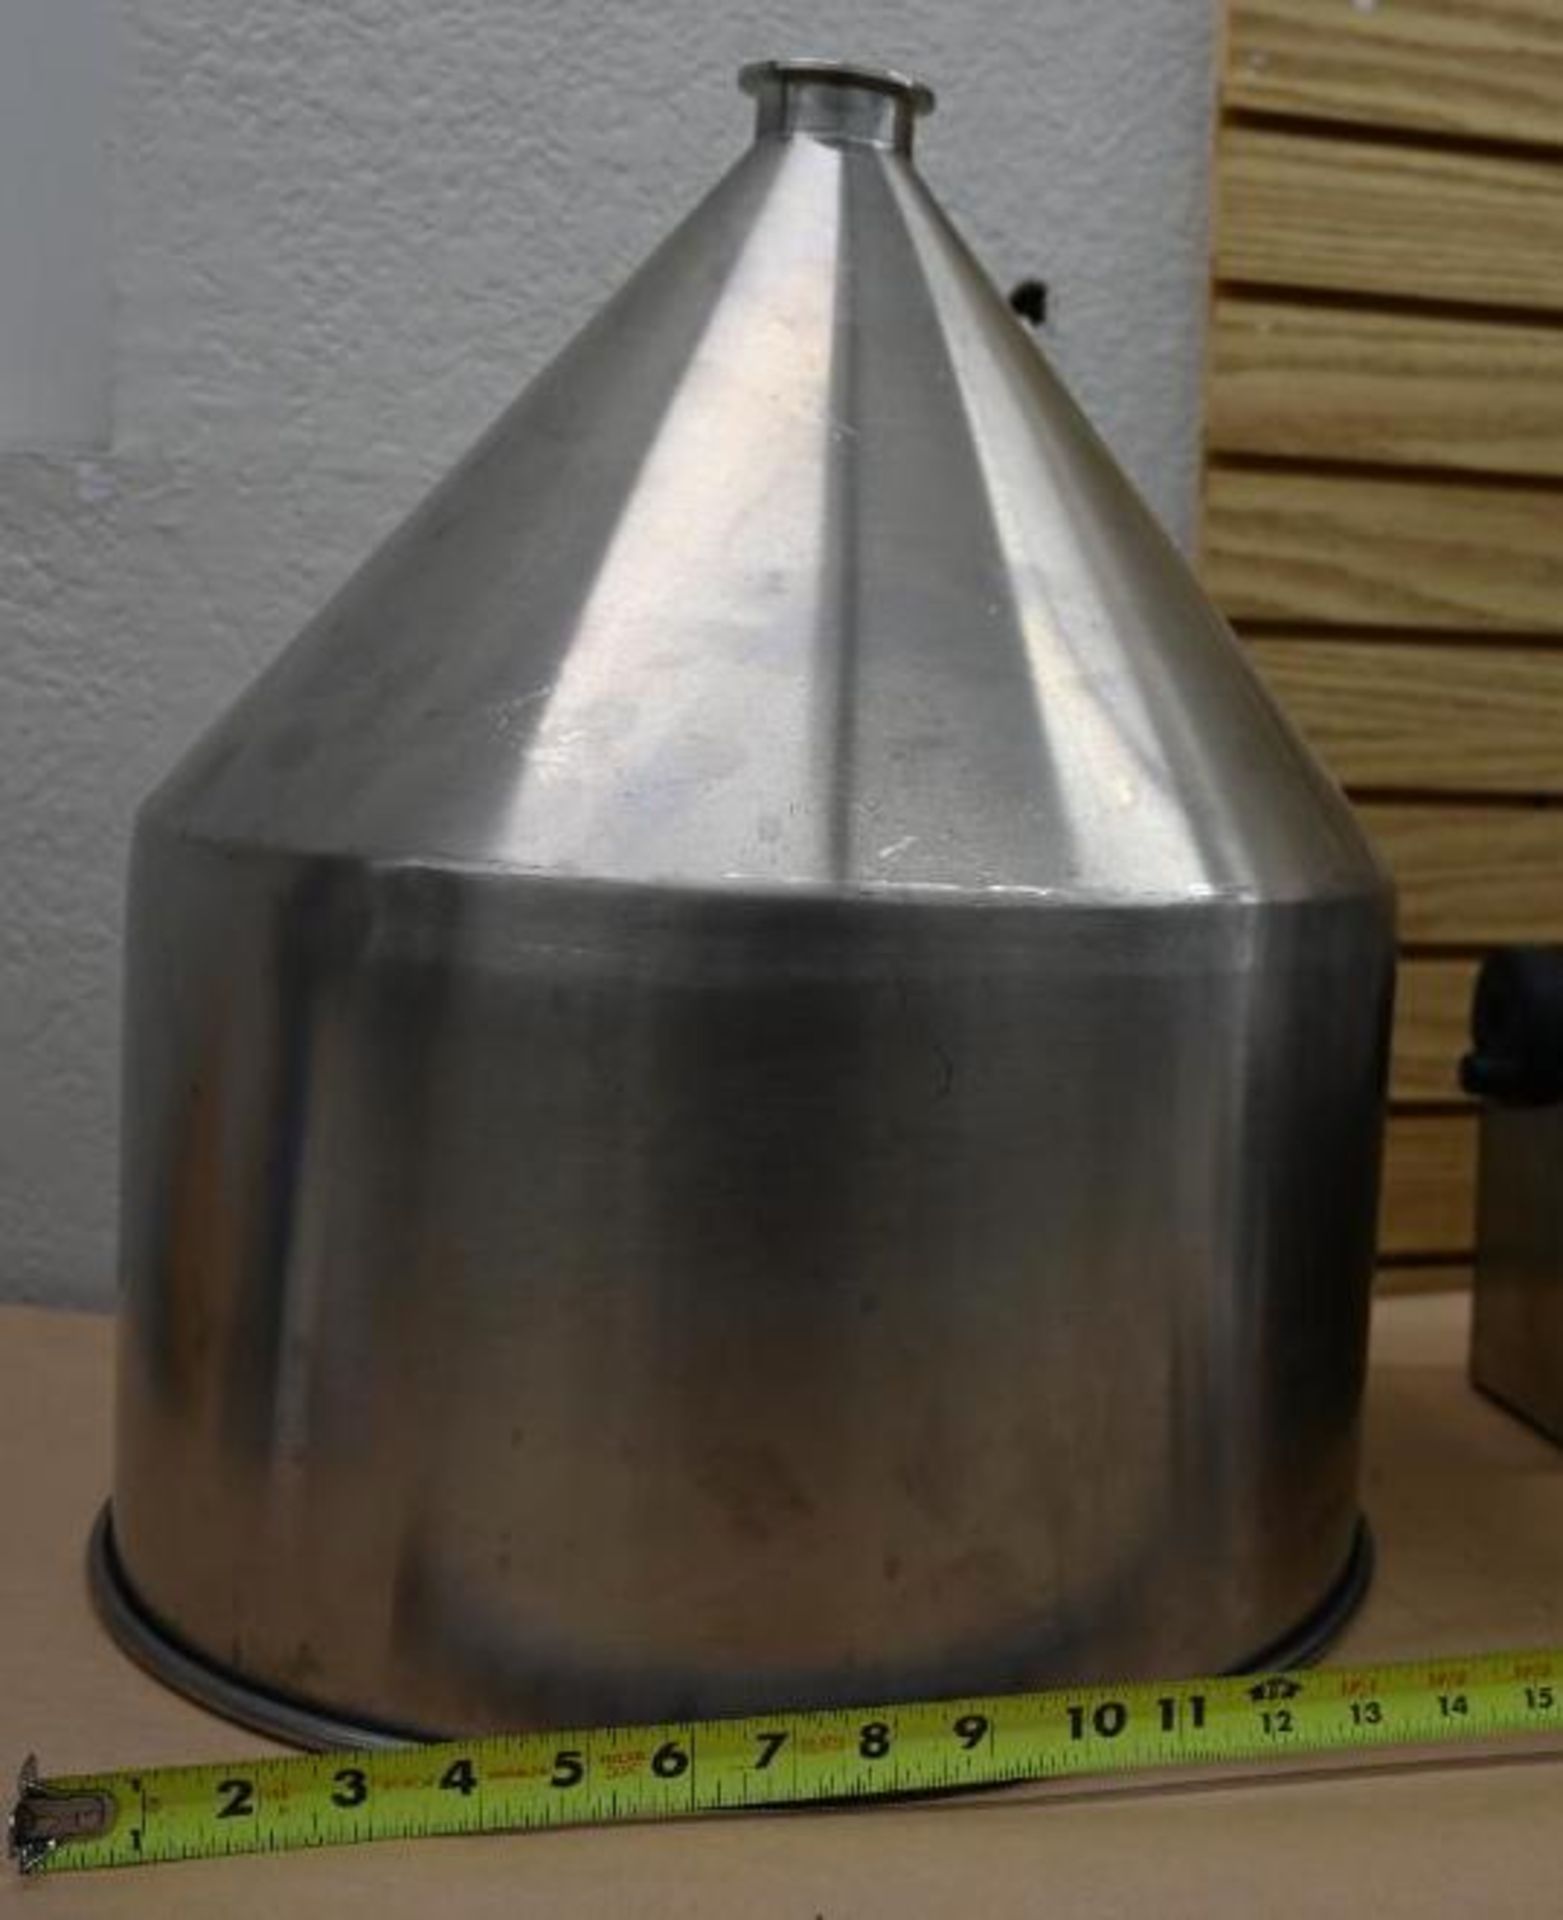 Single Head Pasty Liquid Filling Machine model GIWGD - Image 5 of 13